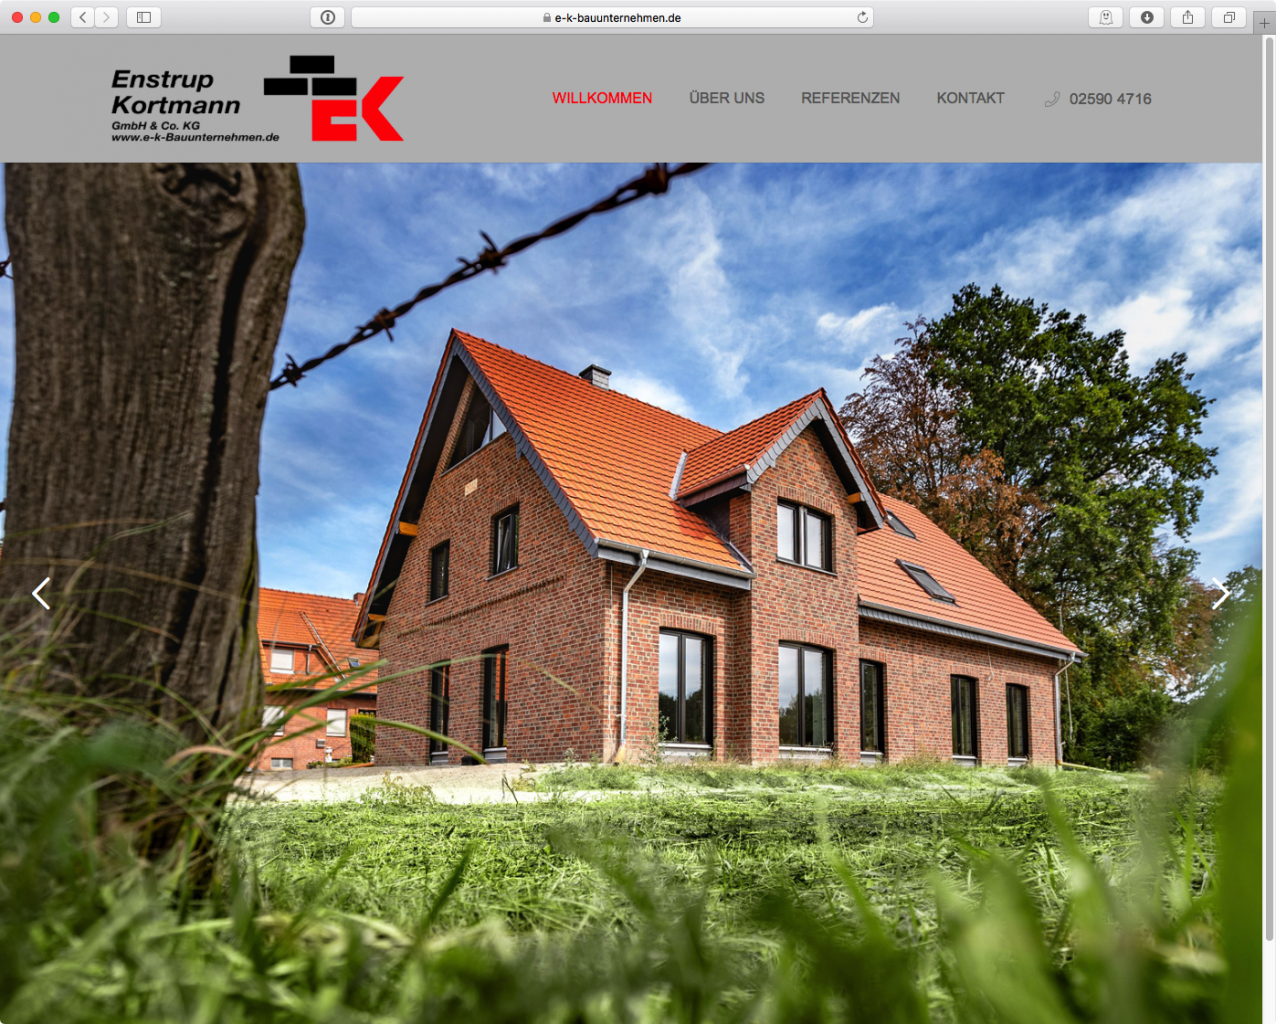 E-K-Bauunternehmen - Home